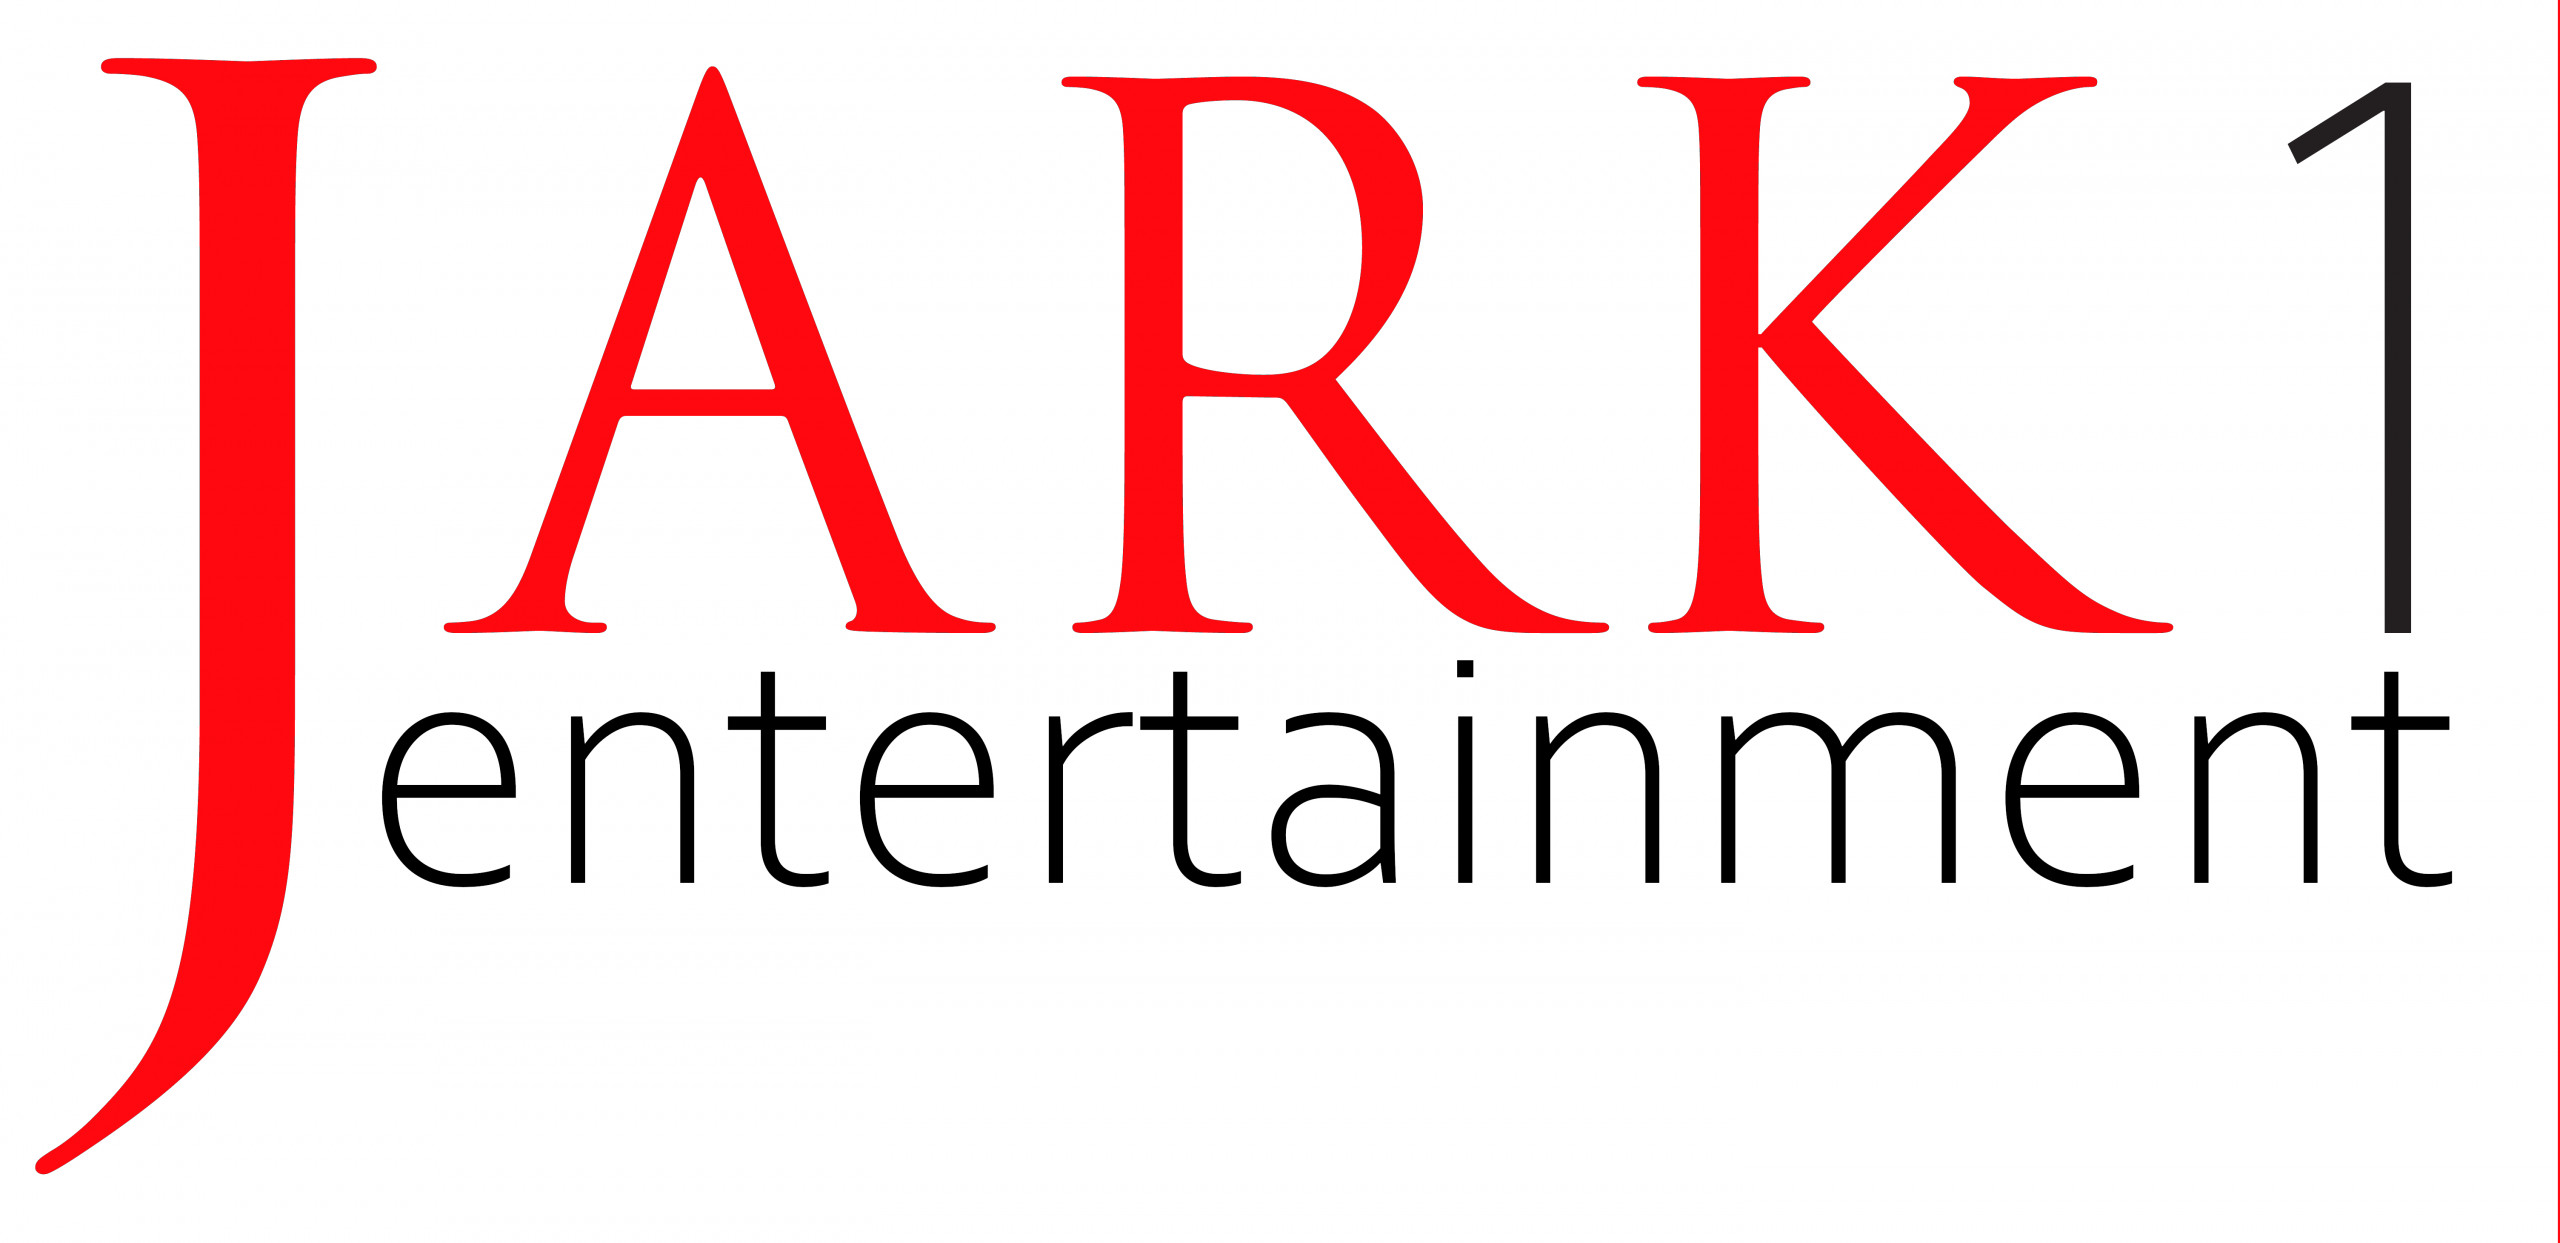 jark 1 entertainment